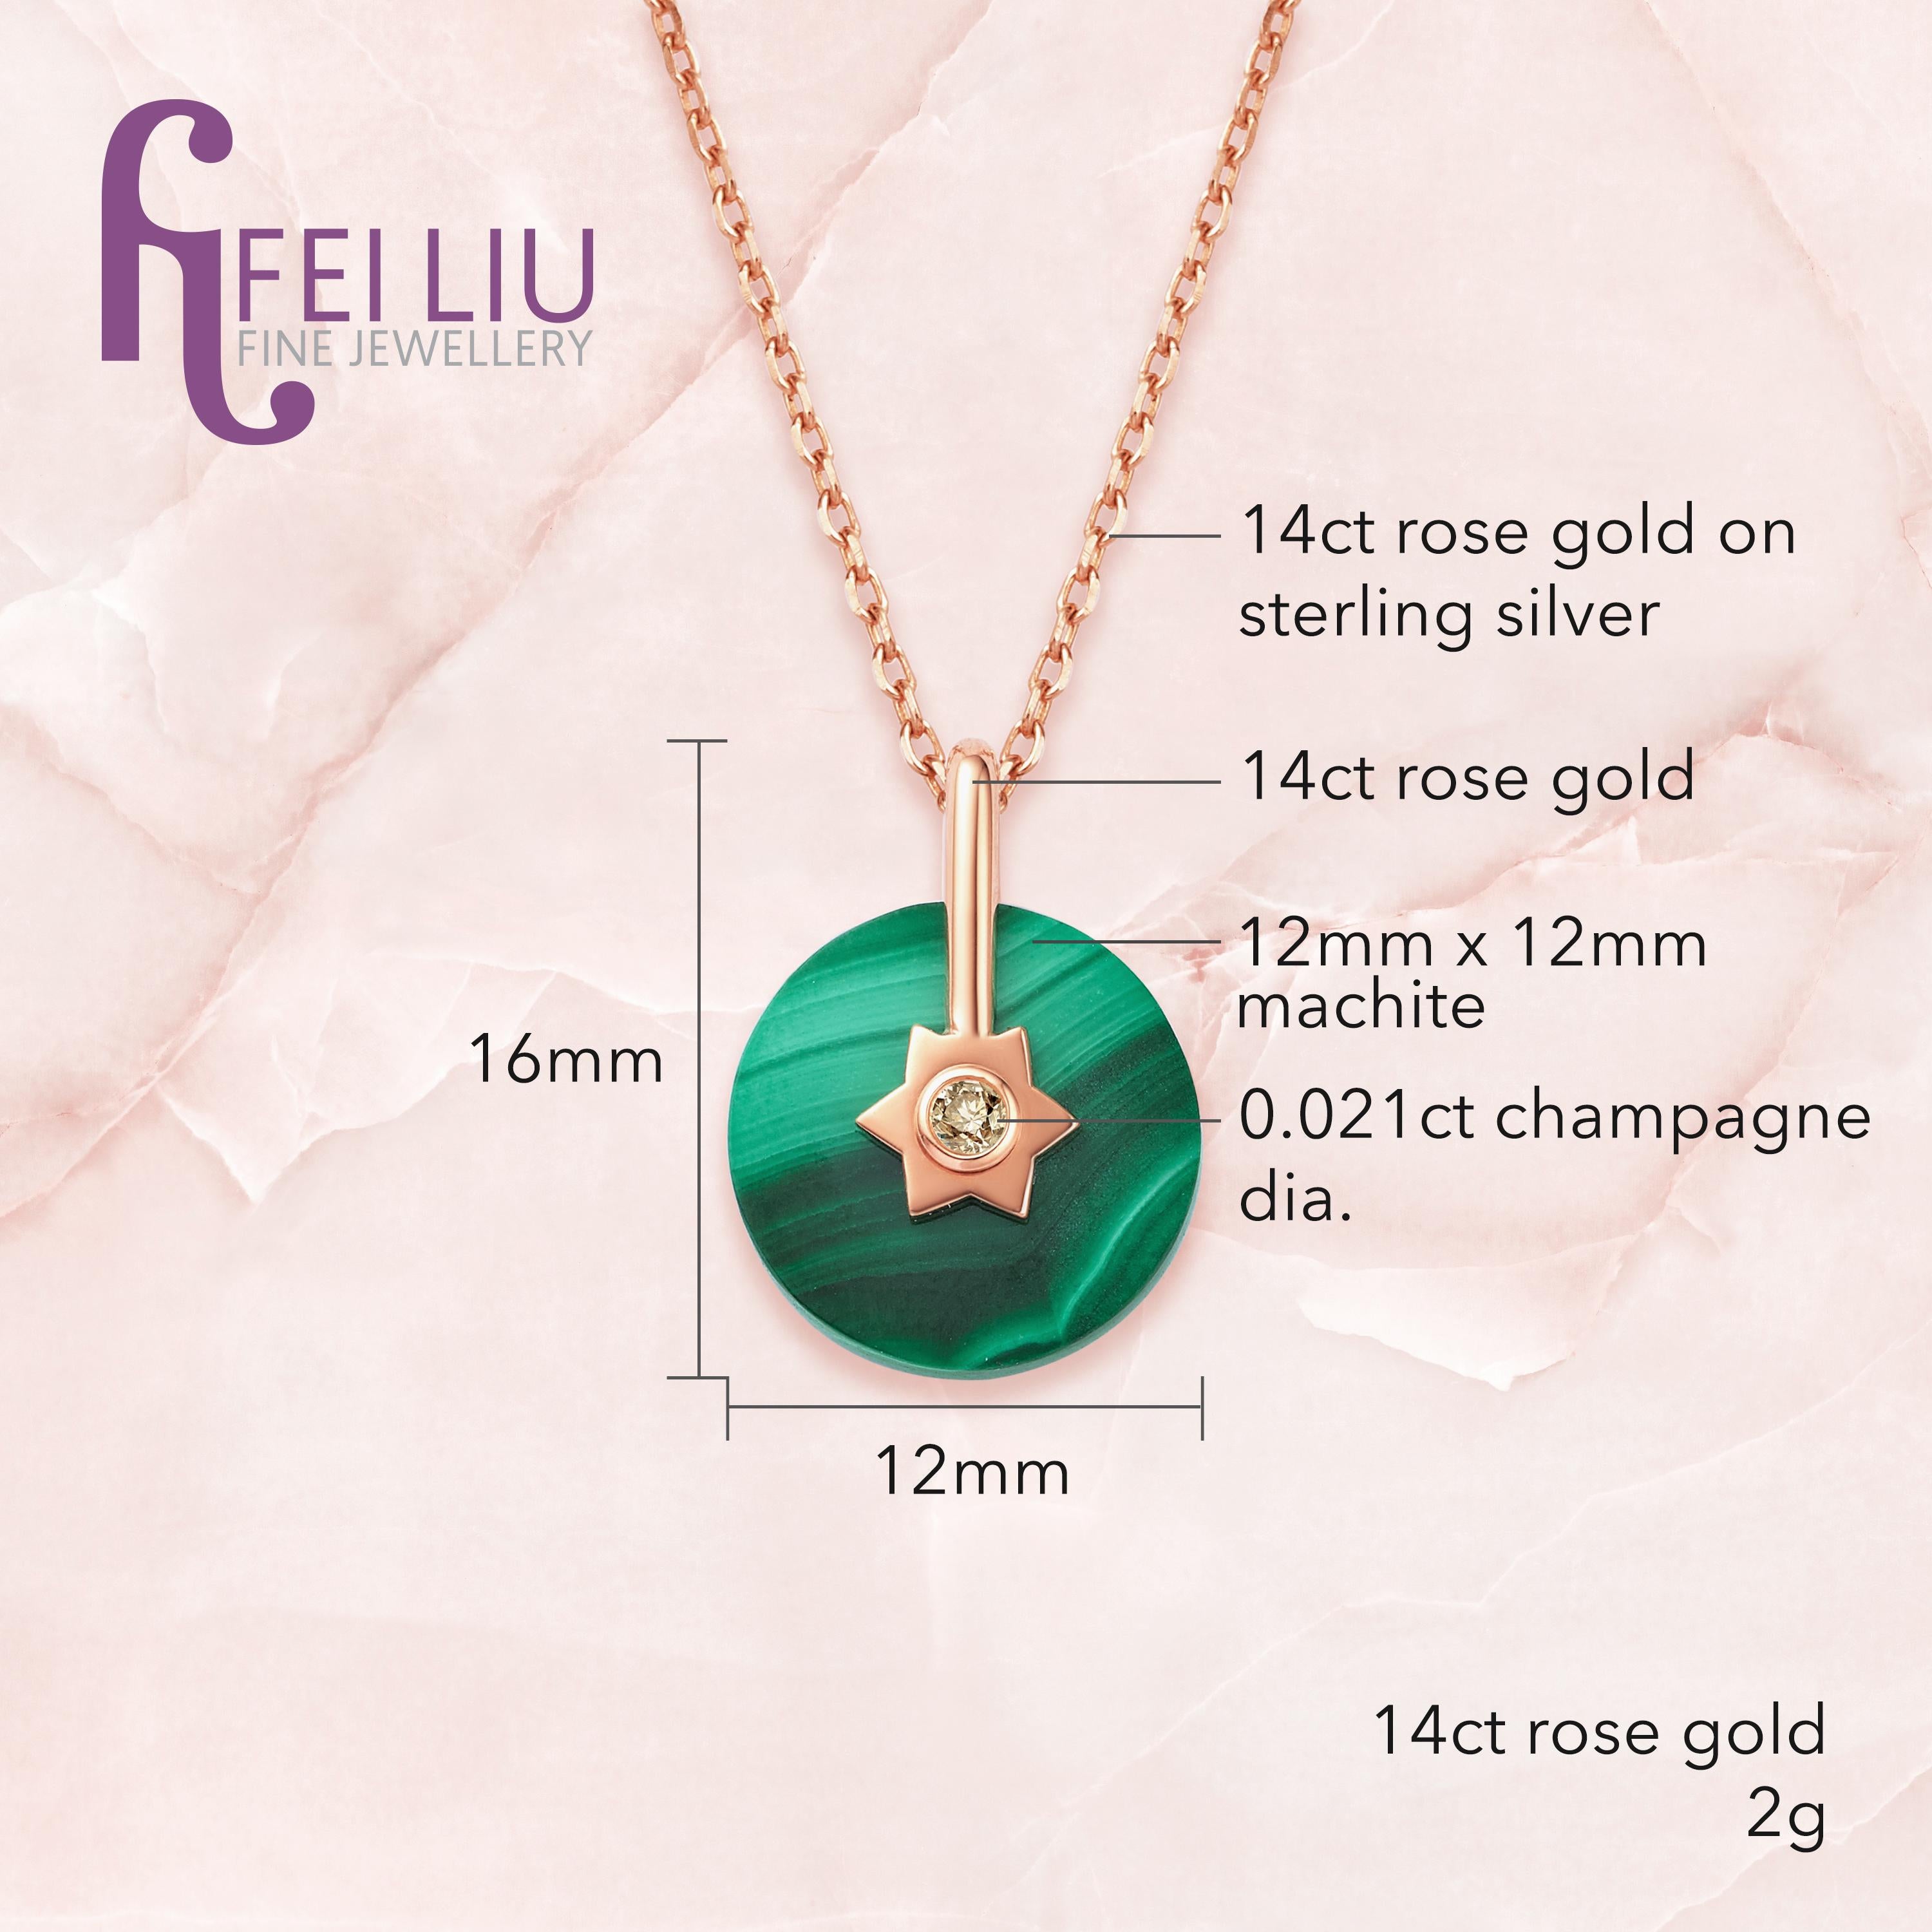 Fei Liu Malachite Diamond Rose Gold Necklace Earrings Ring 5